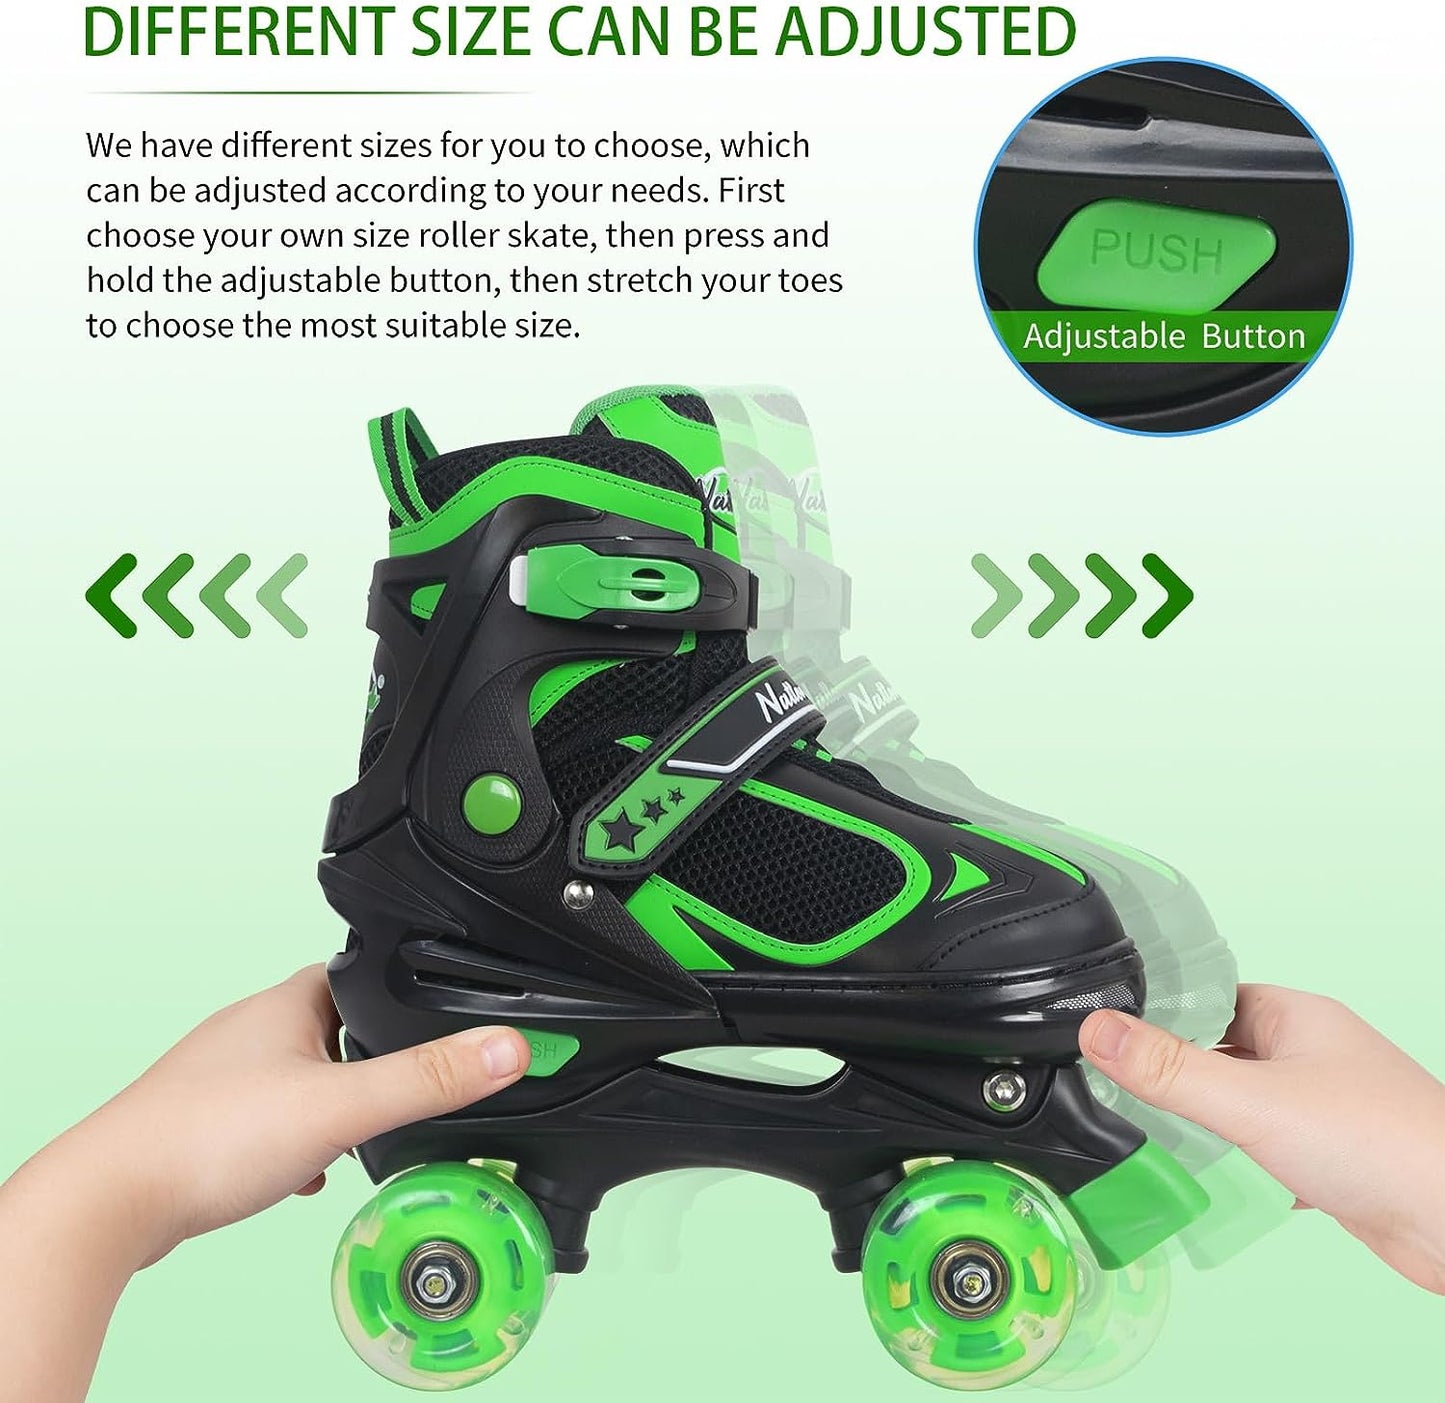 Nattork Adjustable Roller Skates for Kids-Green